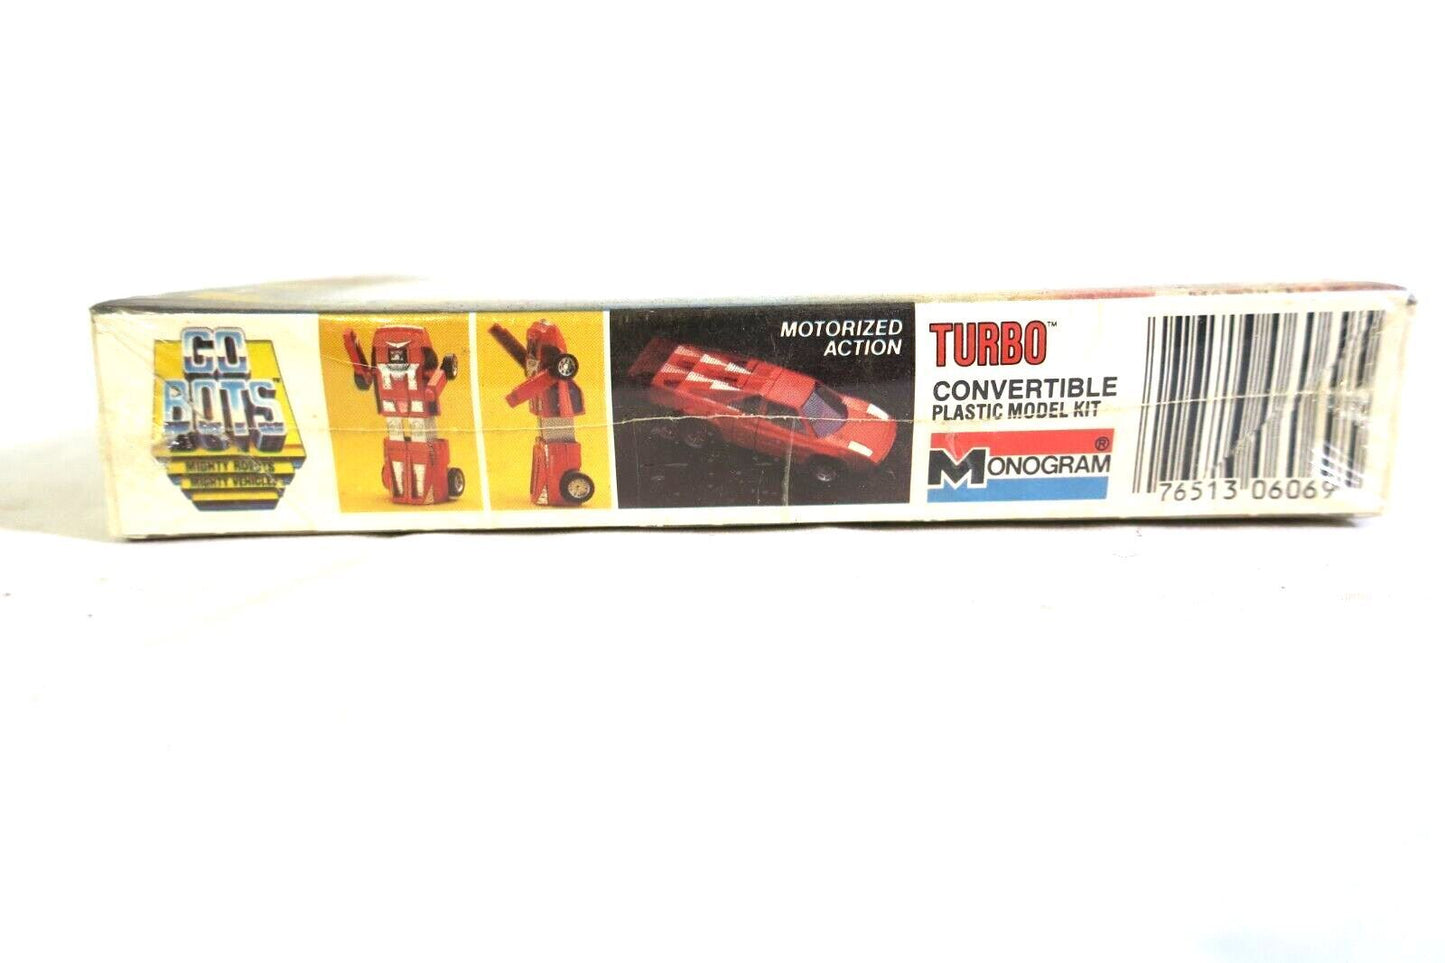 Rare Vintage GO Bots Turbo Convertible Model Kit 1984 Monogram 6069 Sealed (A7)